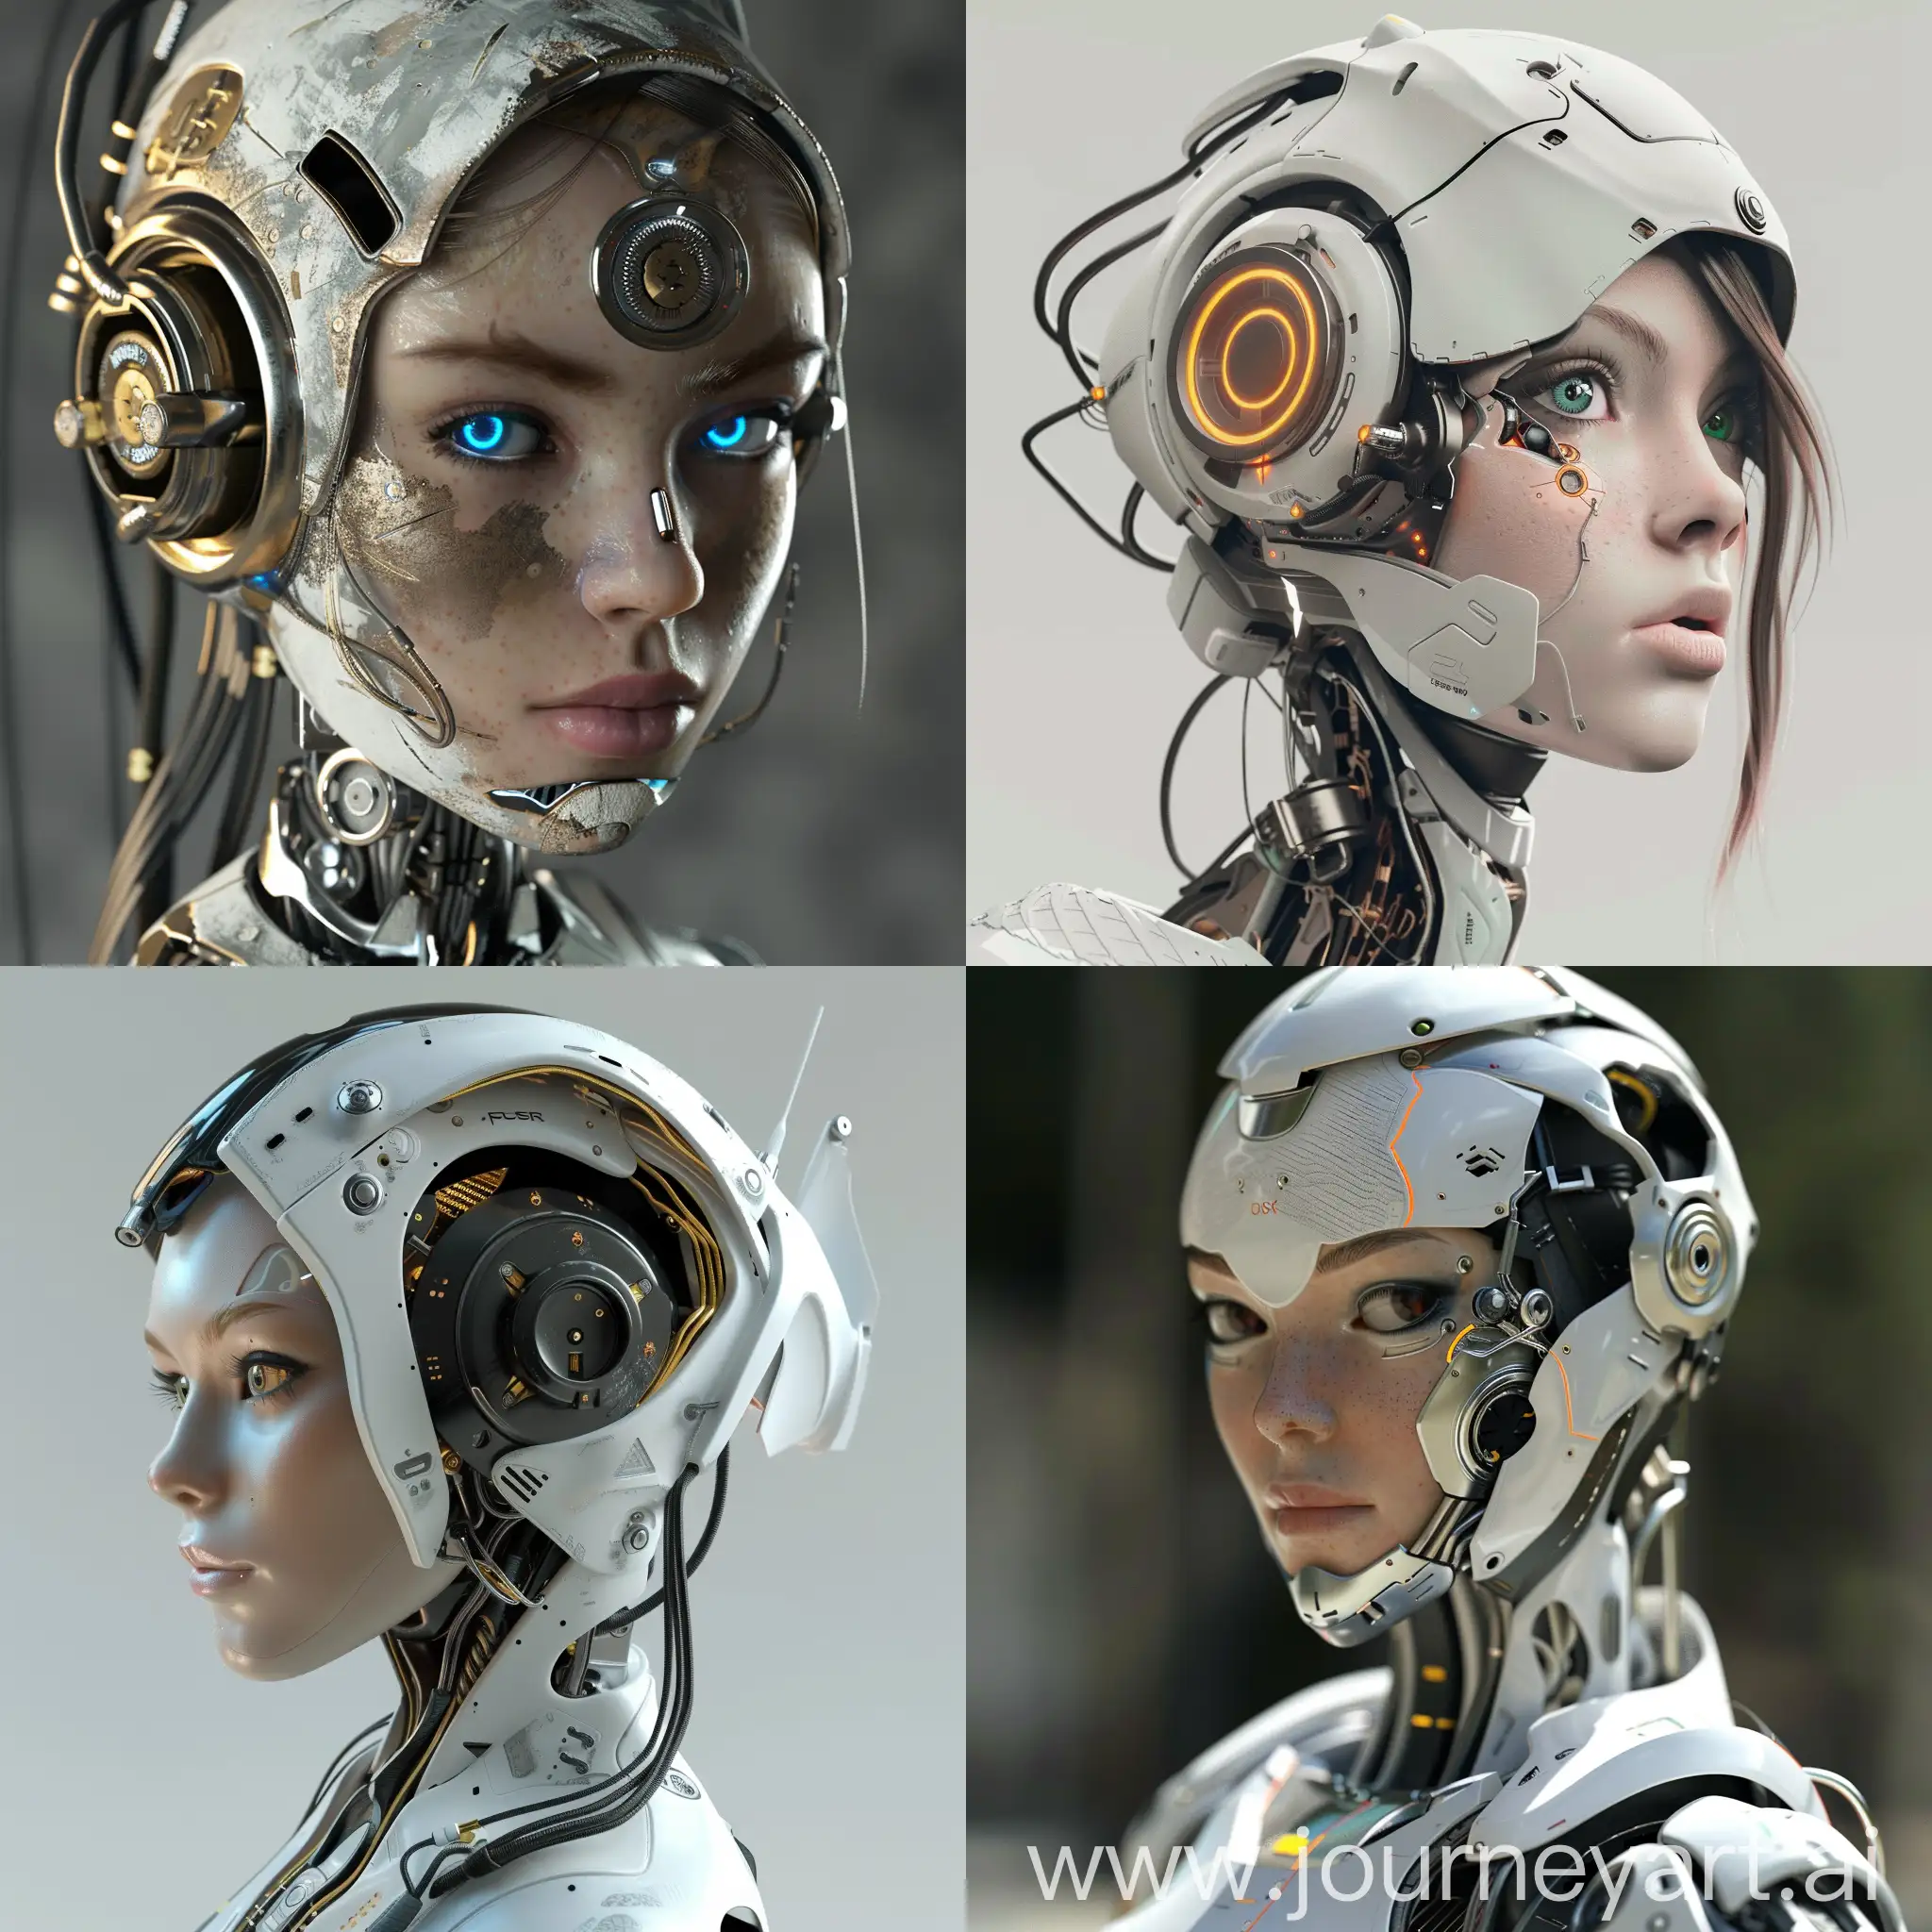 Girl-Robot-in-Fantastic-Space-SciFi-Artwork